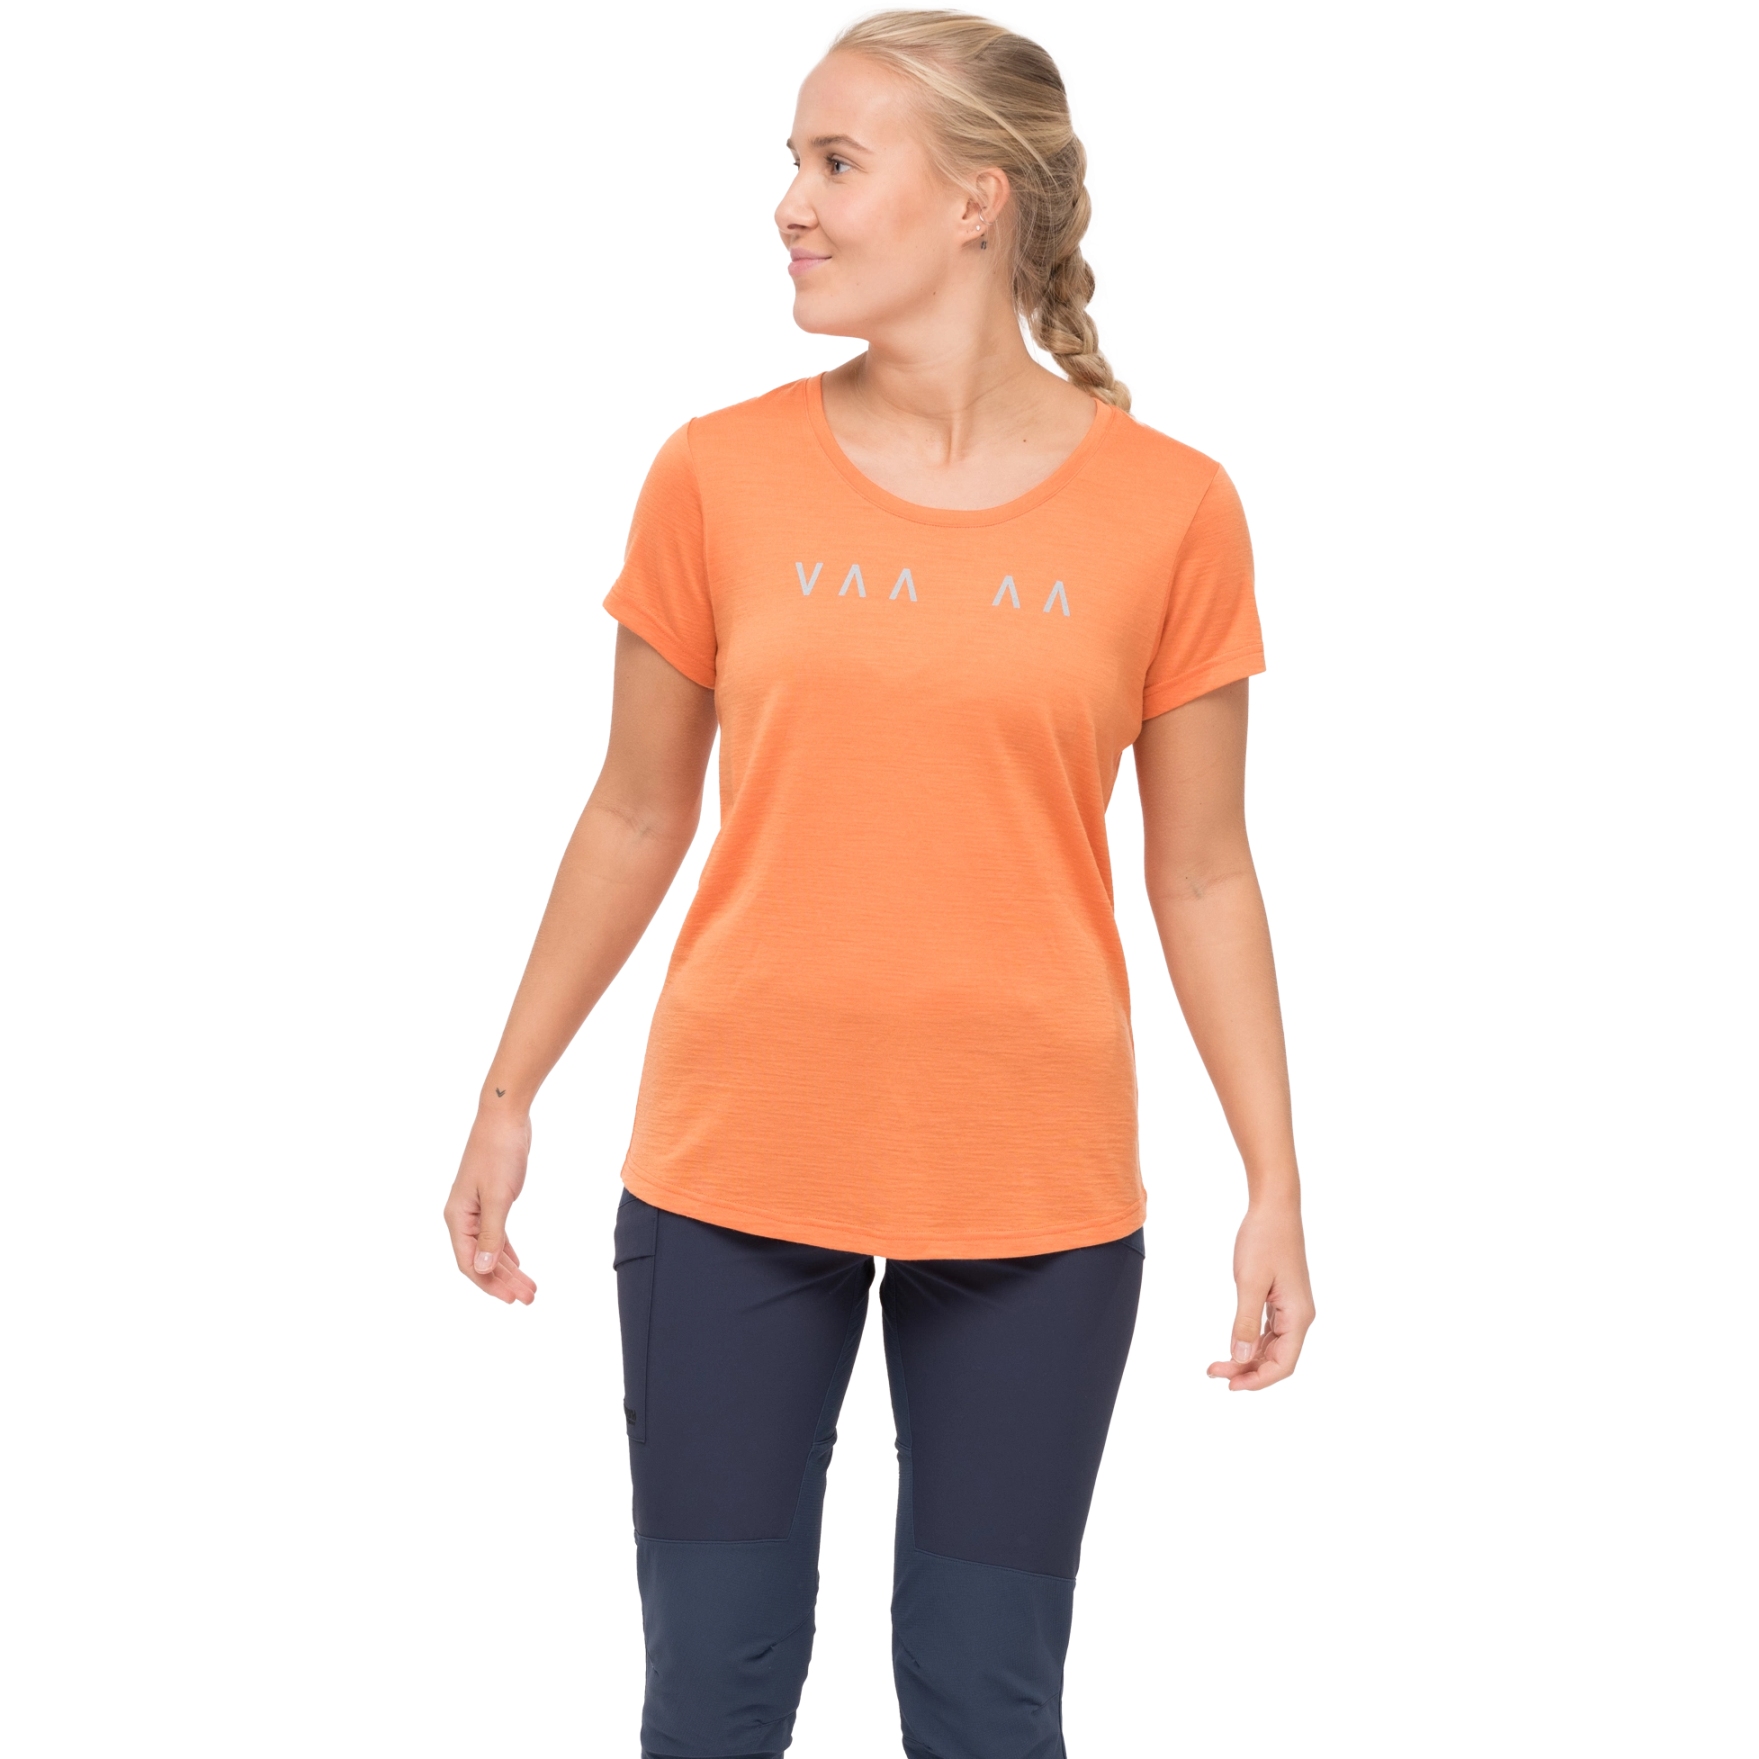 Produktbild von Bergans Vaagaa Explore Merino T-Shirt Damen - faded orange/husky blue missing